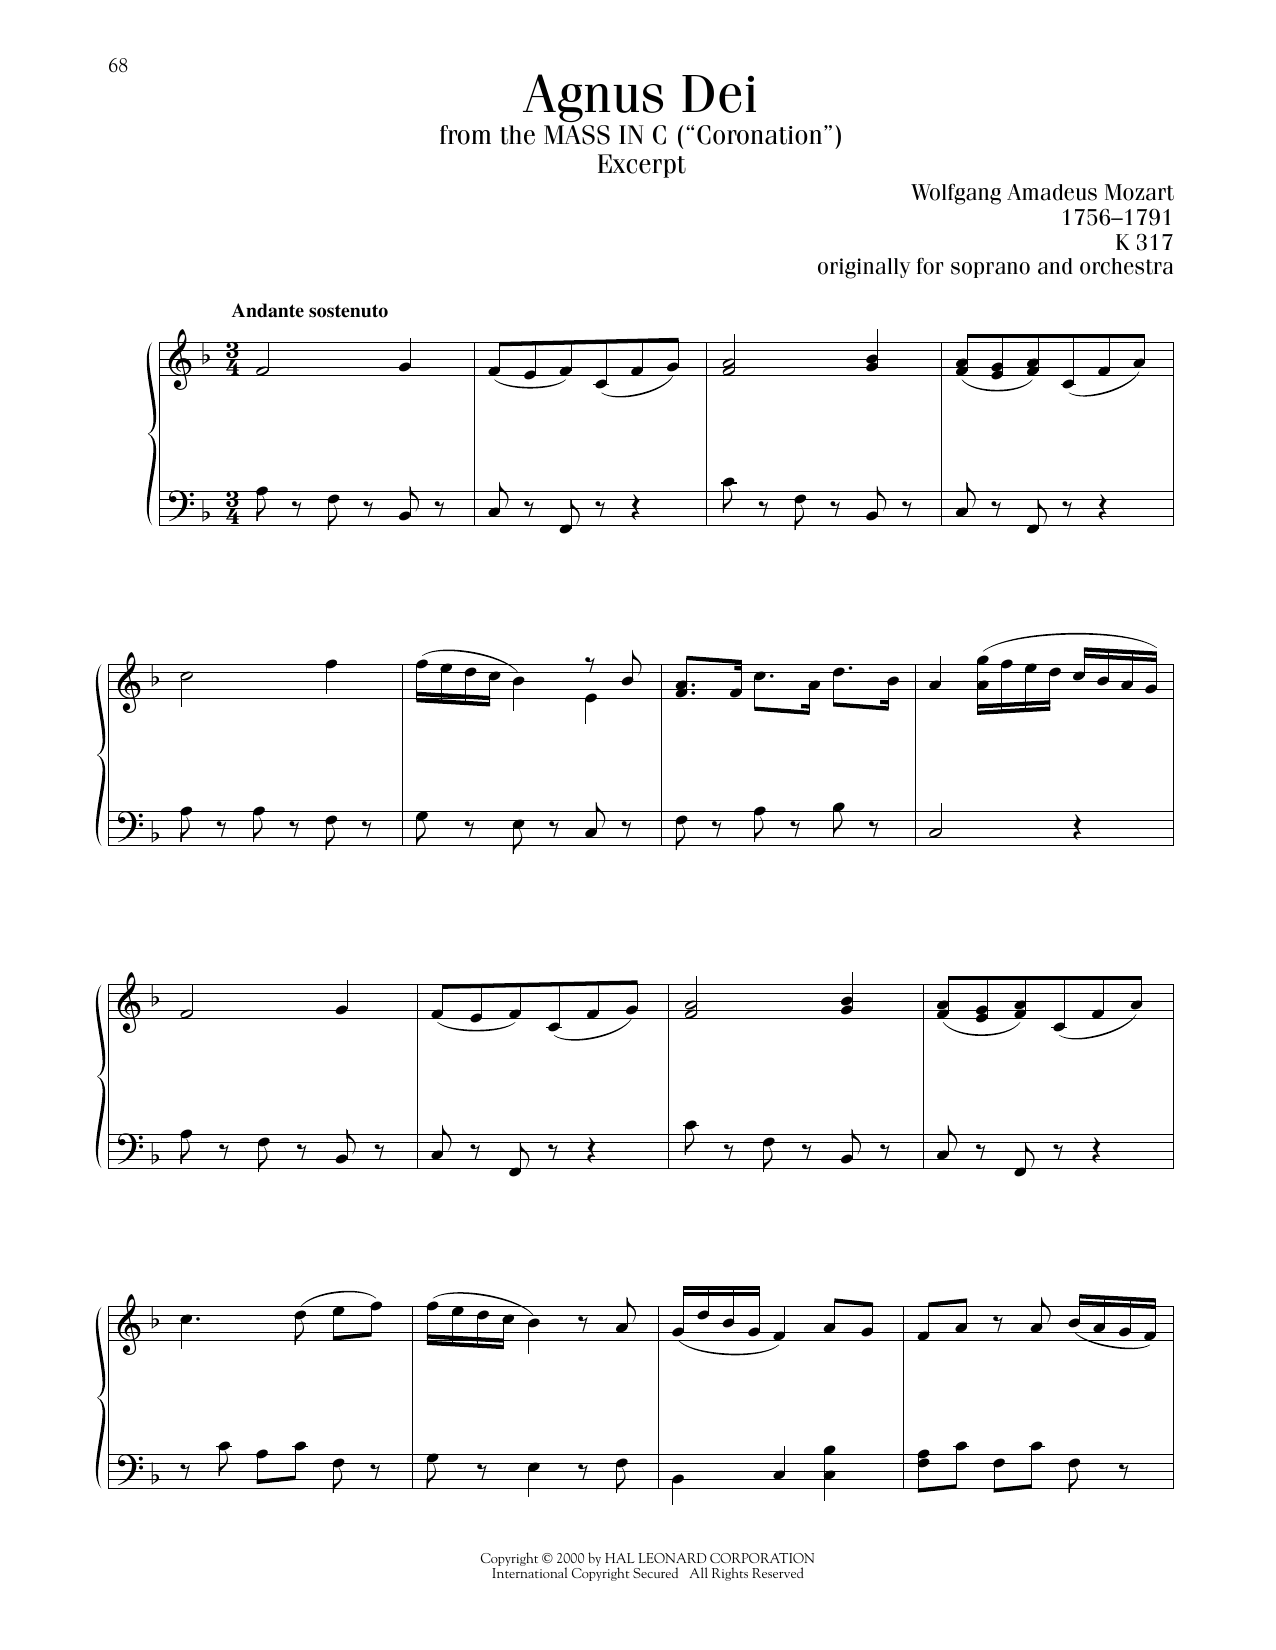 Wolfgang Amadeus Mozart Agnus Dei, Excerpt sheet music notes printable PDF score